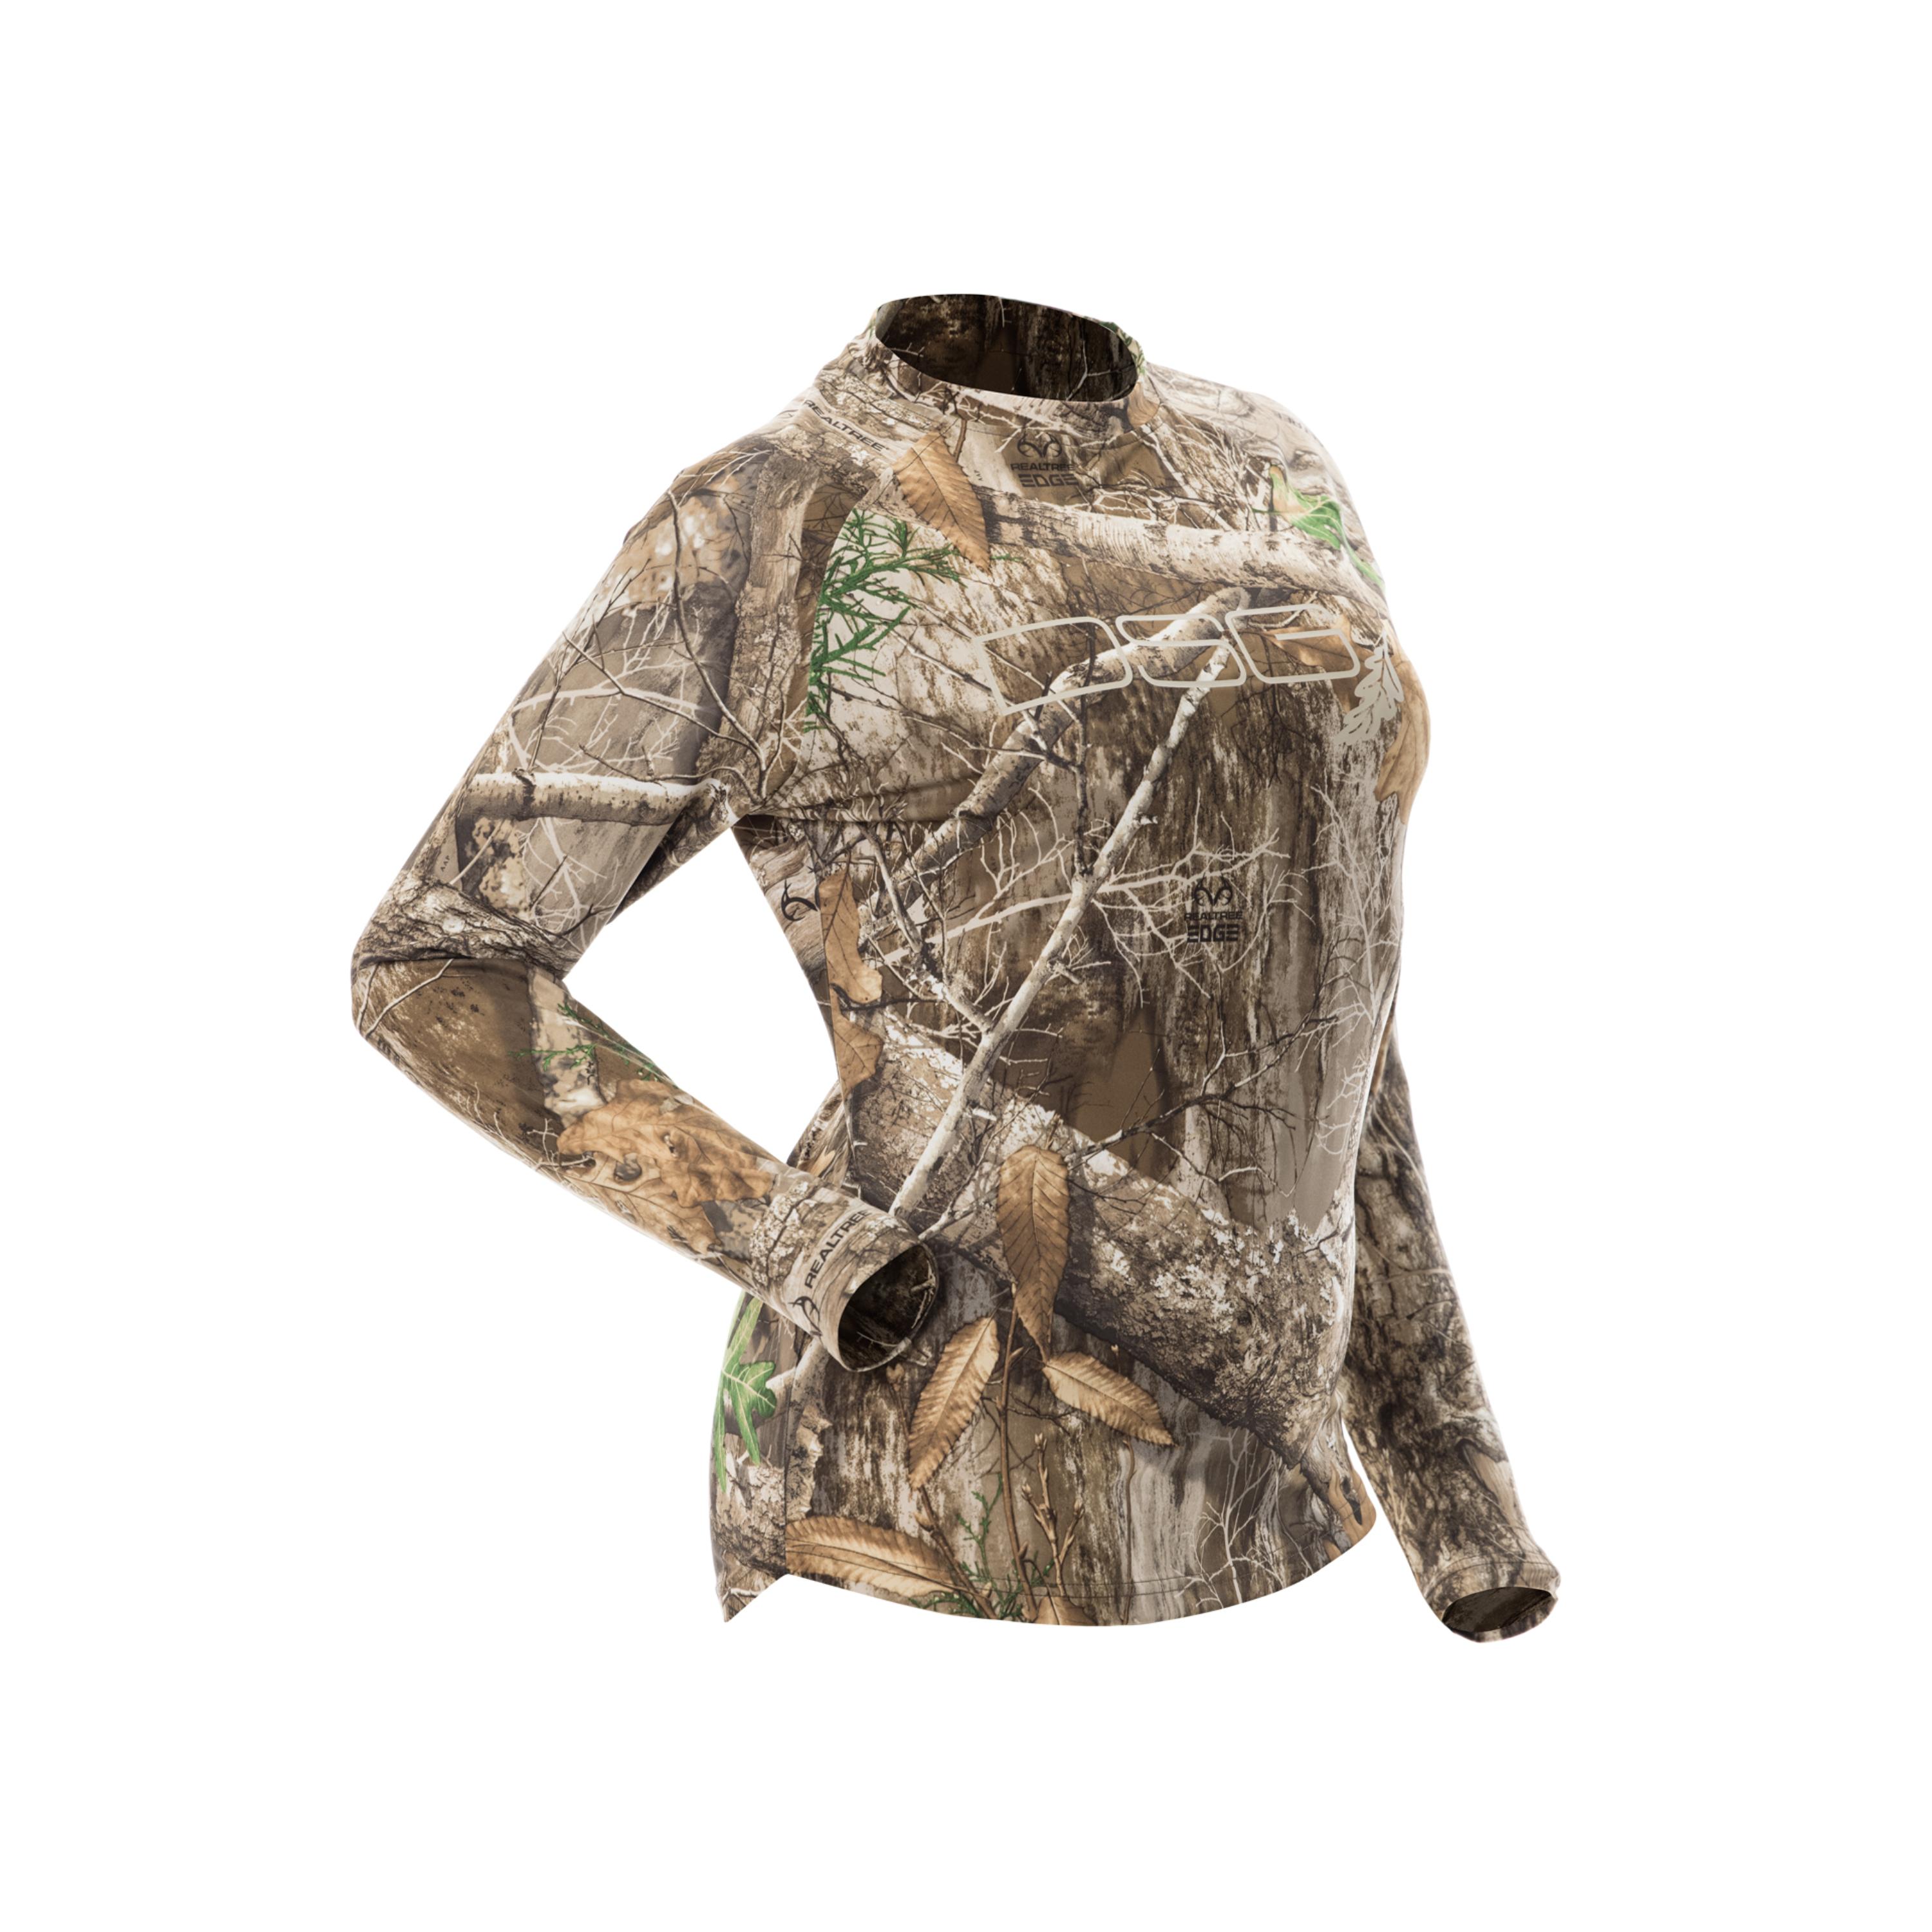 DSG Outerwear Women's Long-Sleeve Camo Tech Hunting Shirt, Small, Realtree Timber